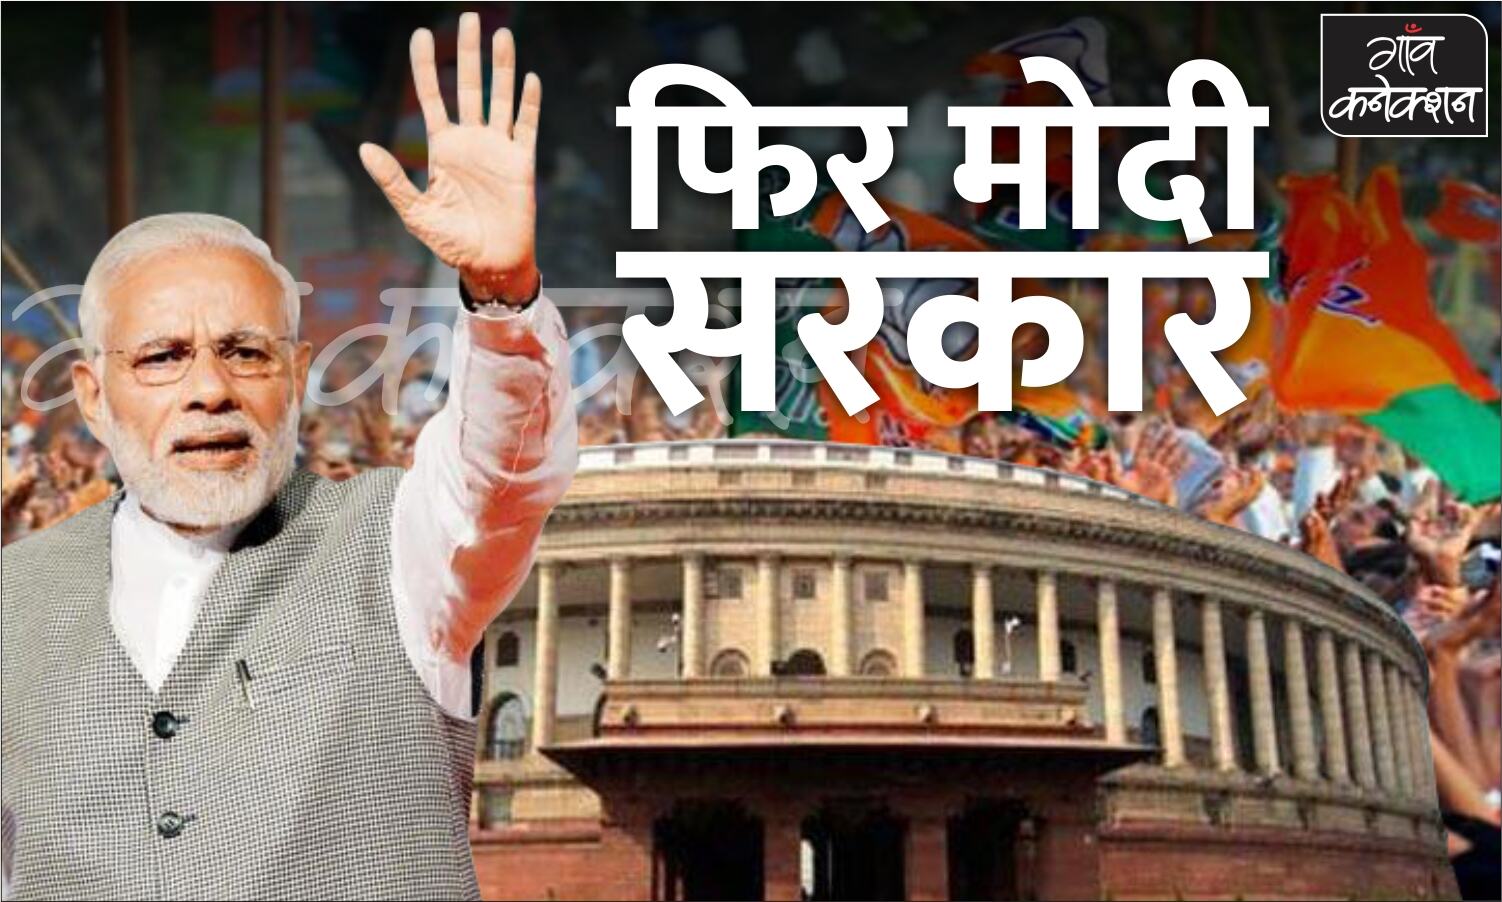 Loksabha Election 2019:  भाजपा की बढ़त बरकरार, रिकॉर्ड मतों से जीते प्रधानमंत्री मोदी